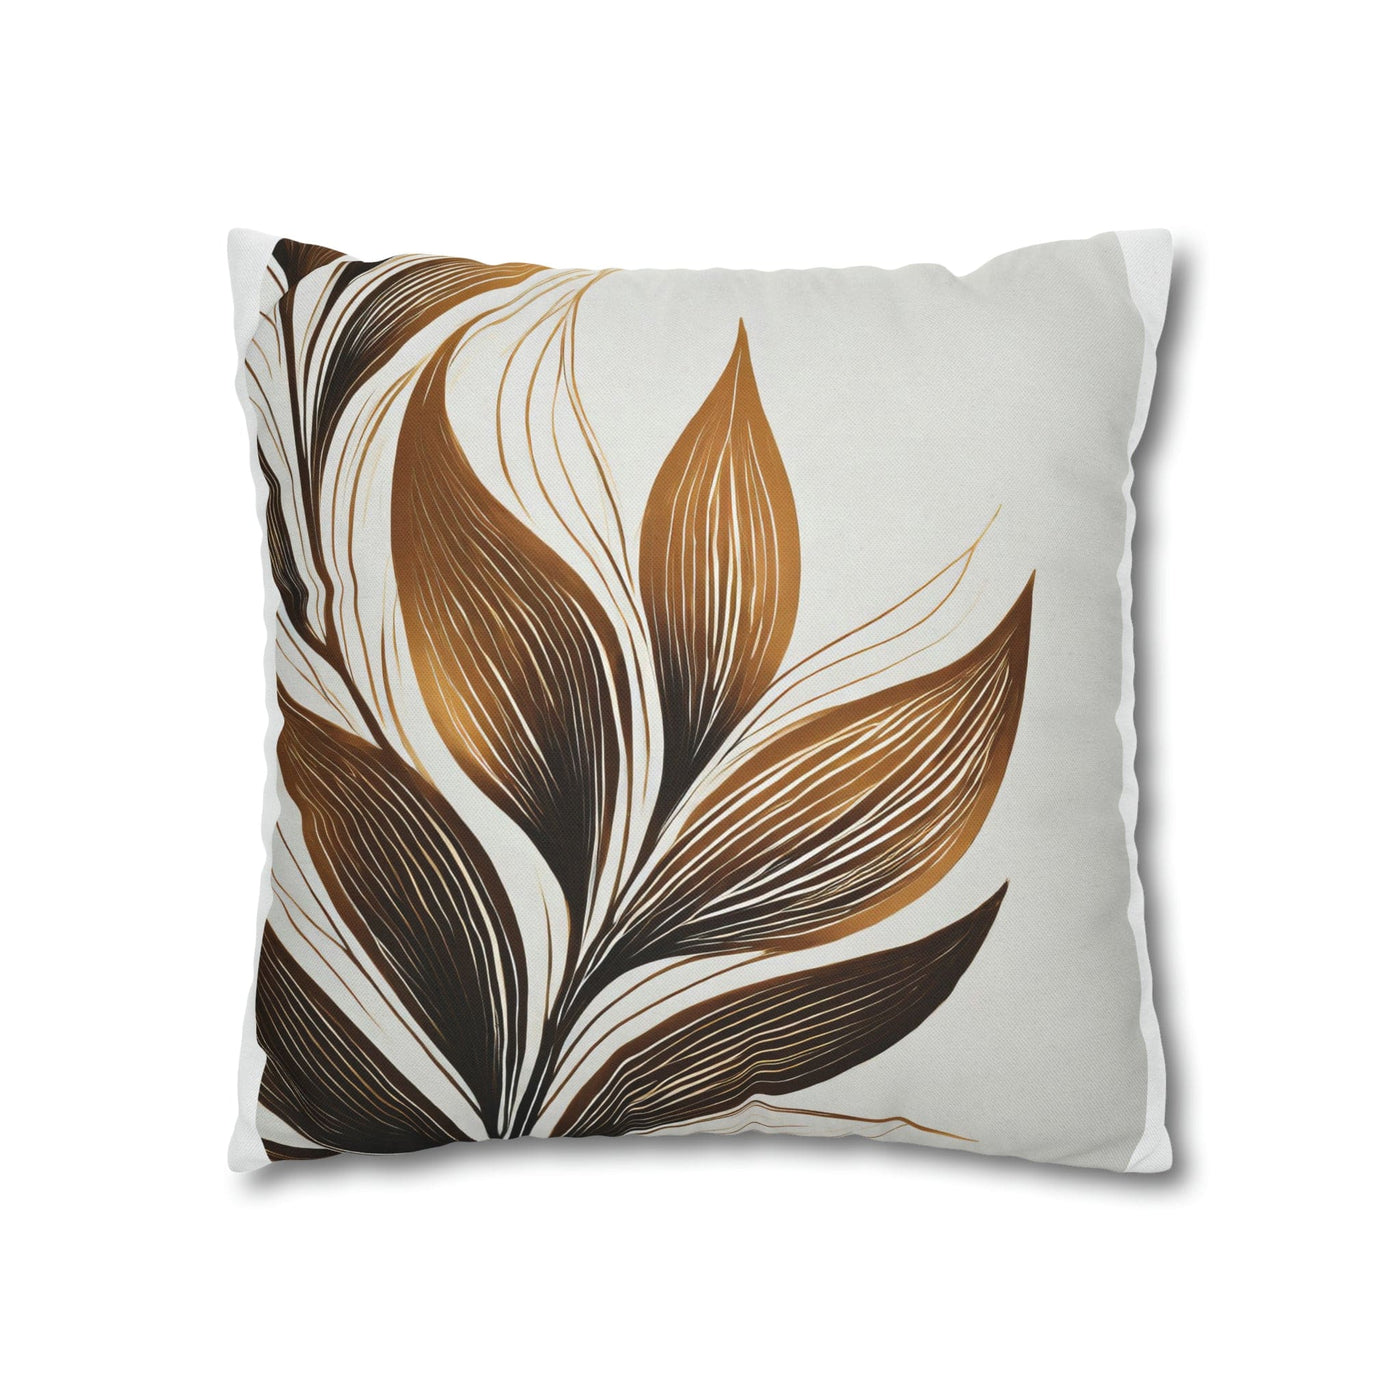 Decorative Throw Pillow Cover Floral Brown Line Art Print 8669 - Home Decor